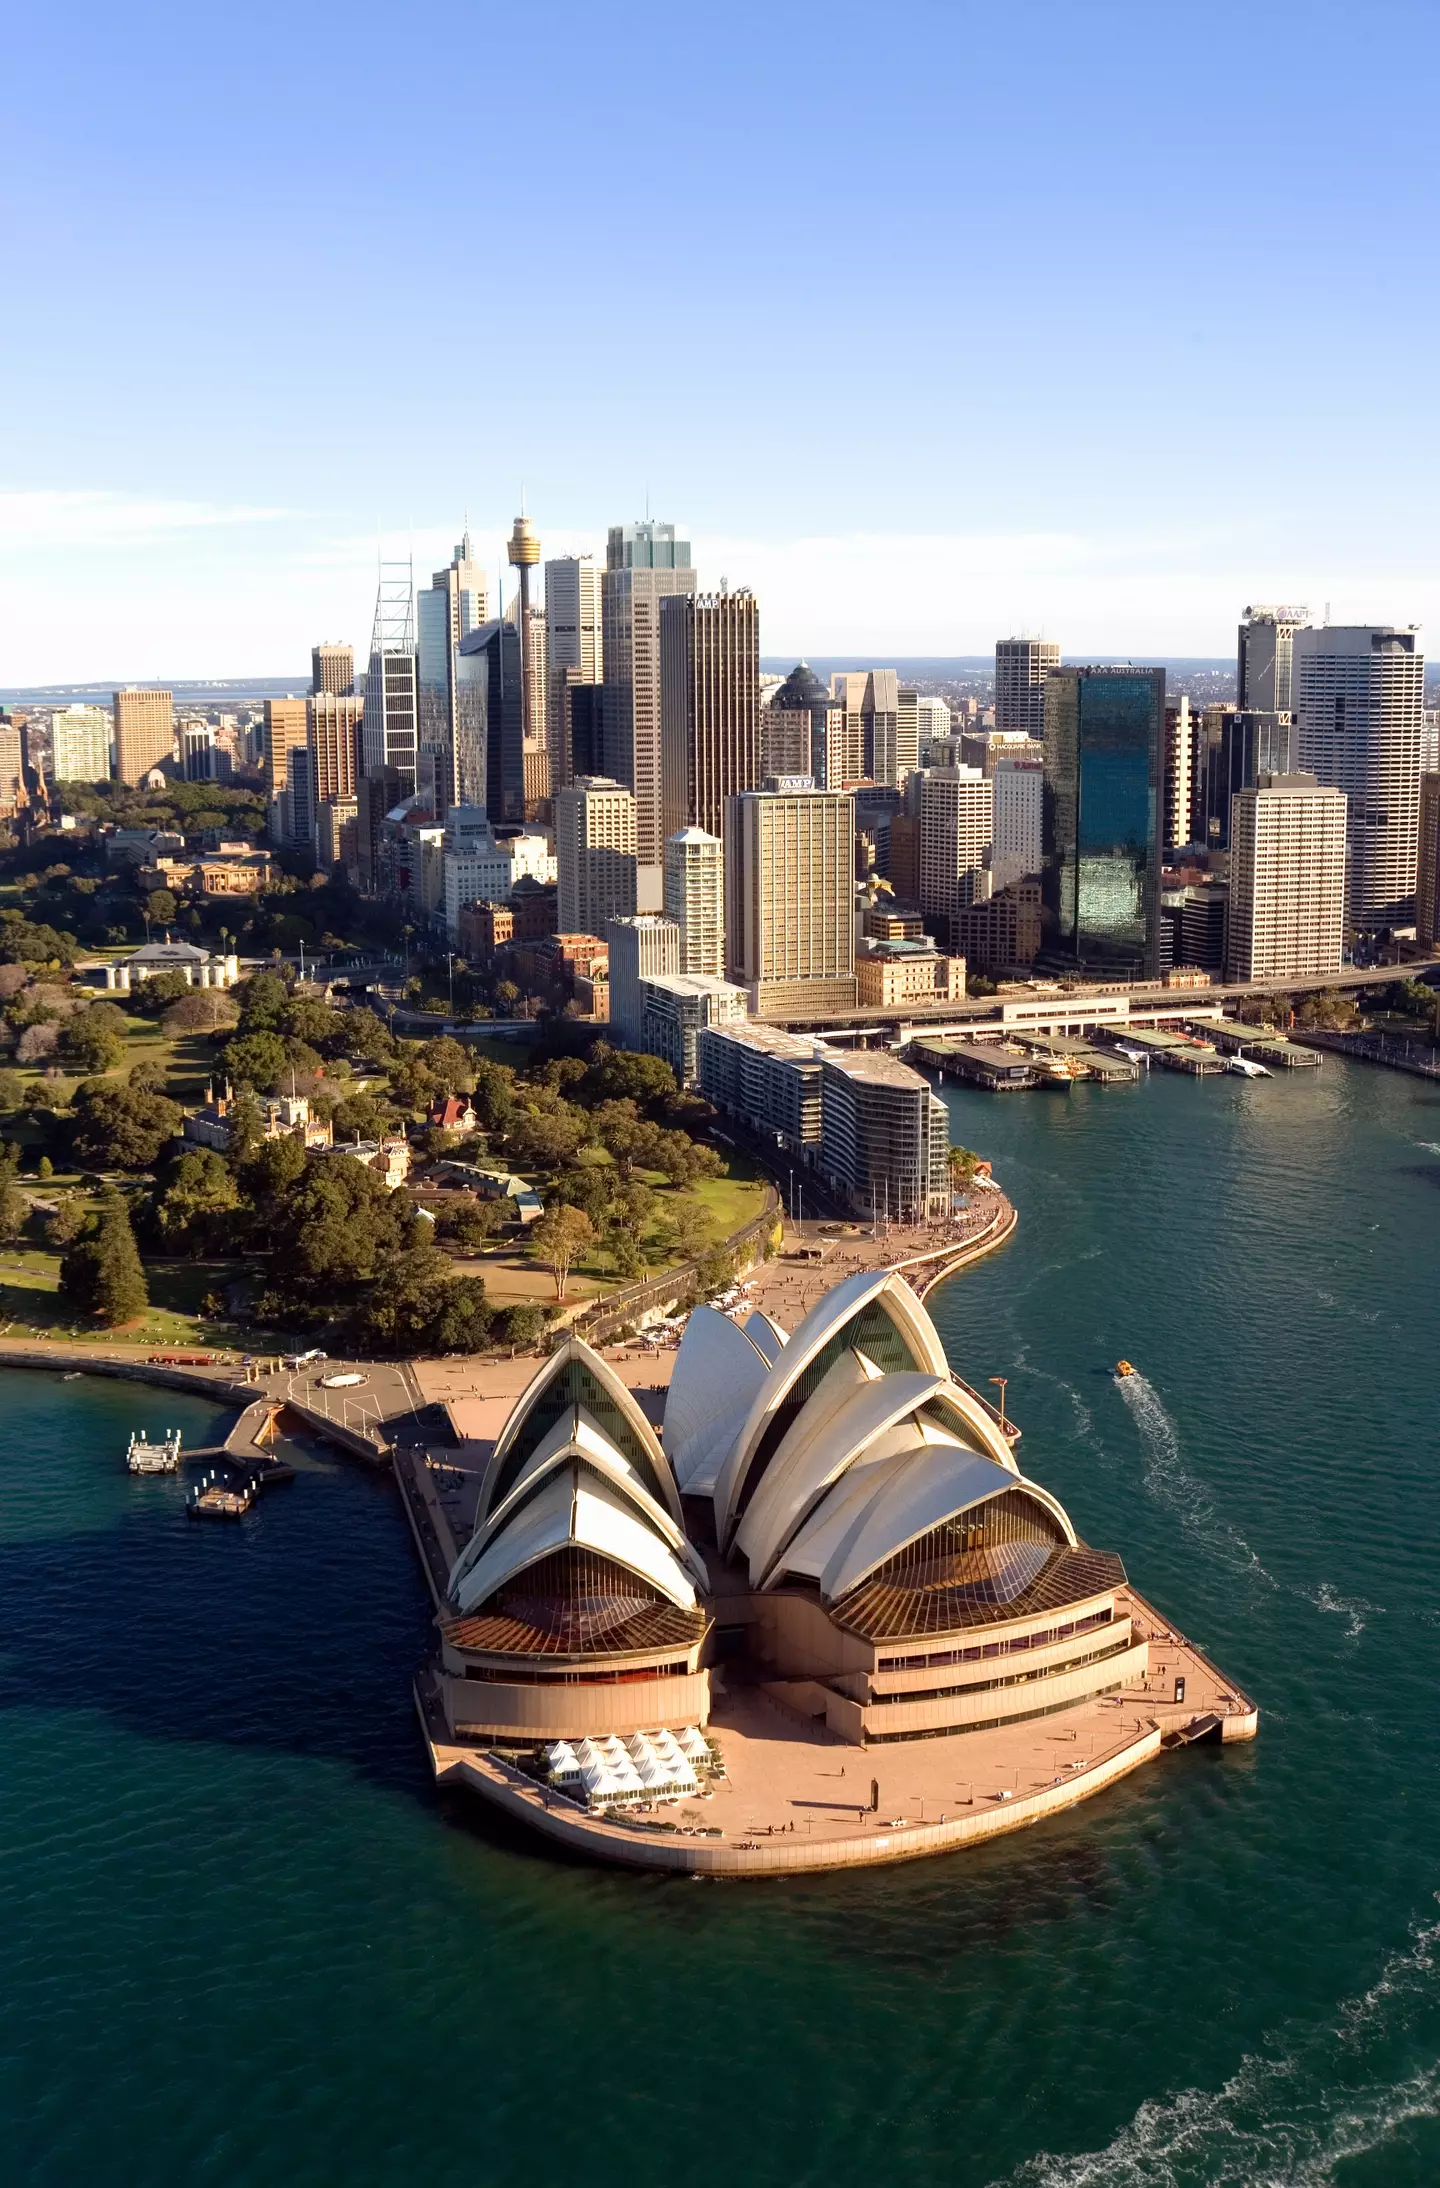 Fancy having the Sydney Opera House on your doorstep?